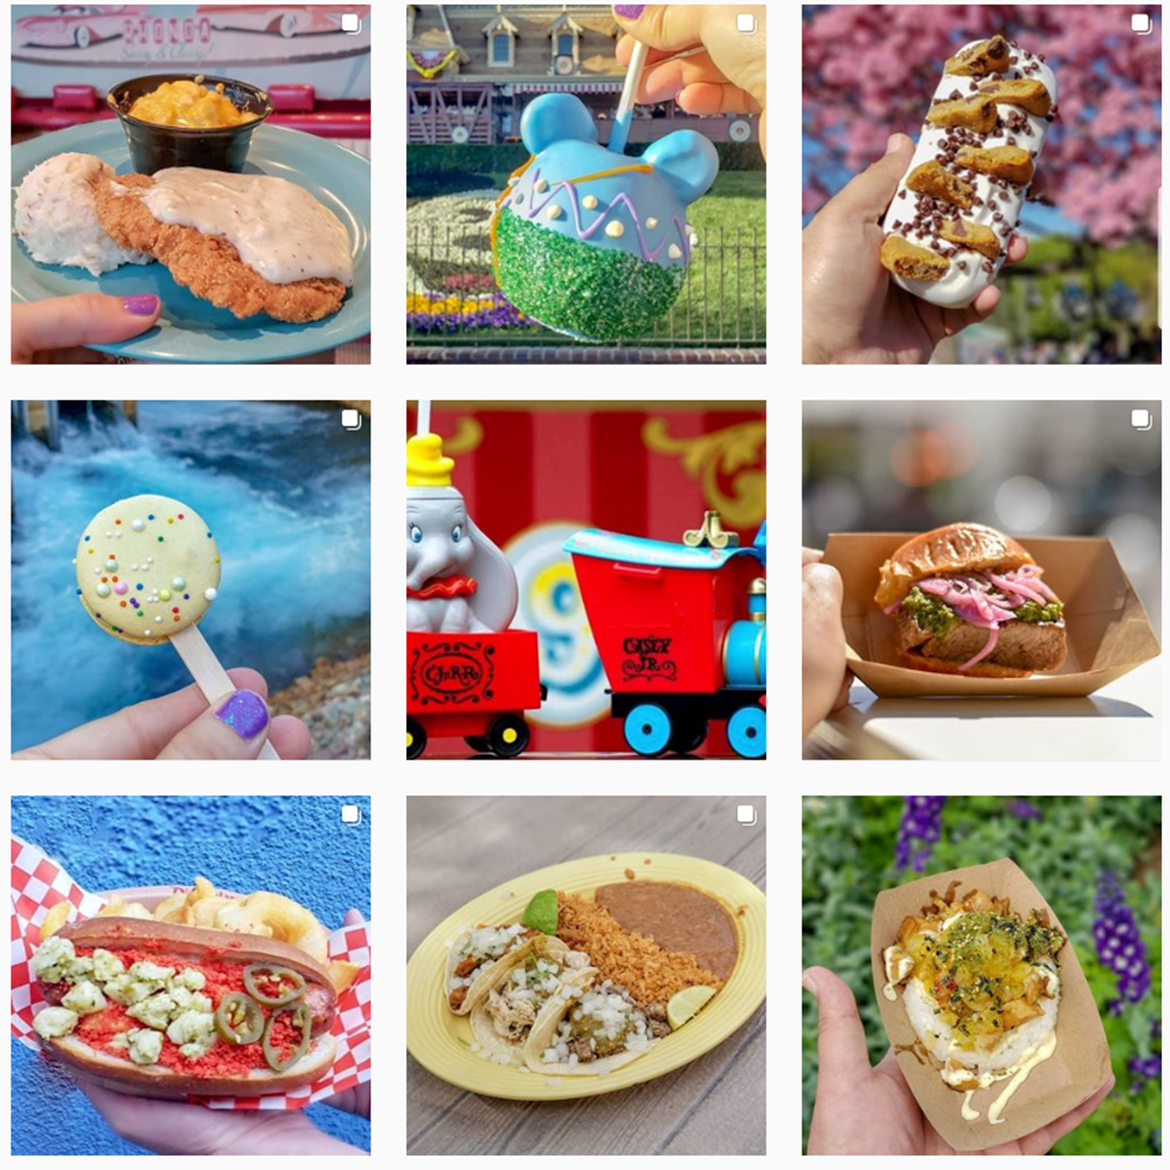 Food at Disneyland on Instagram